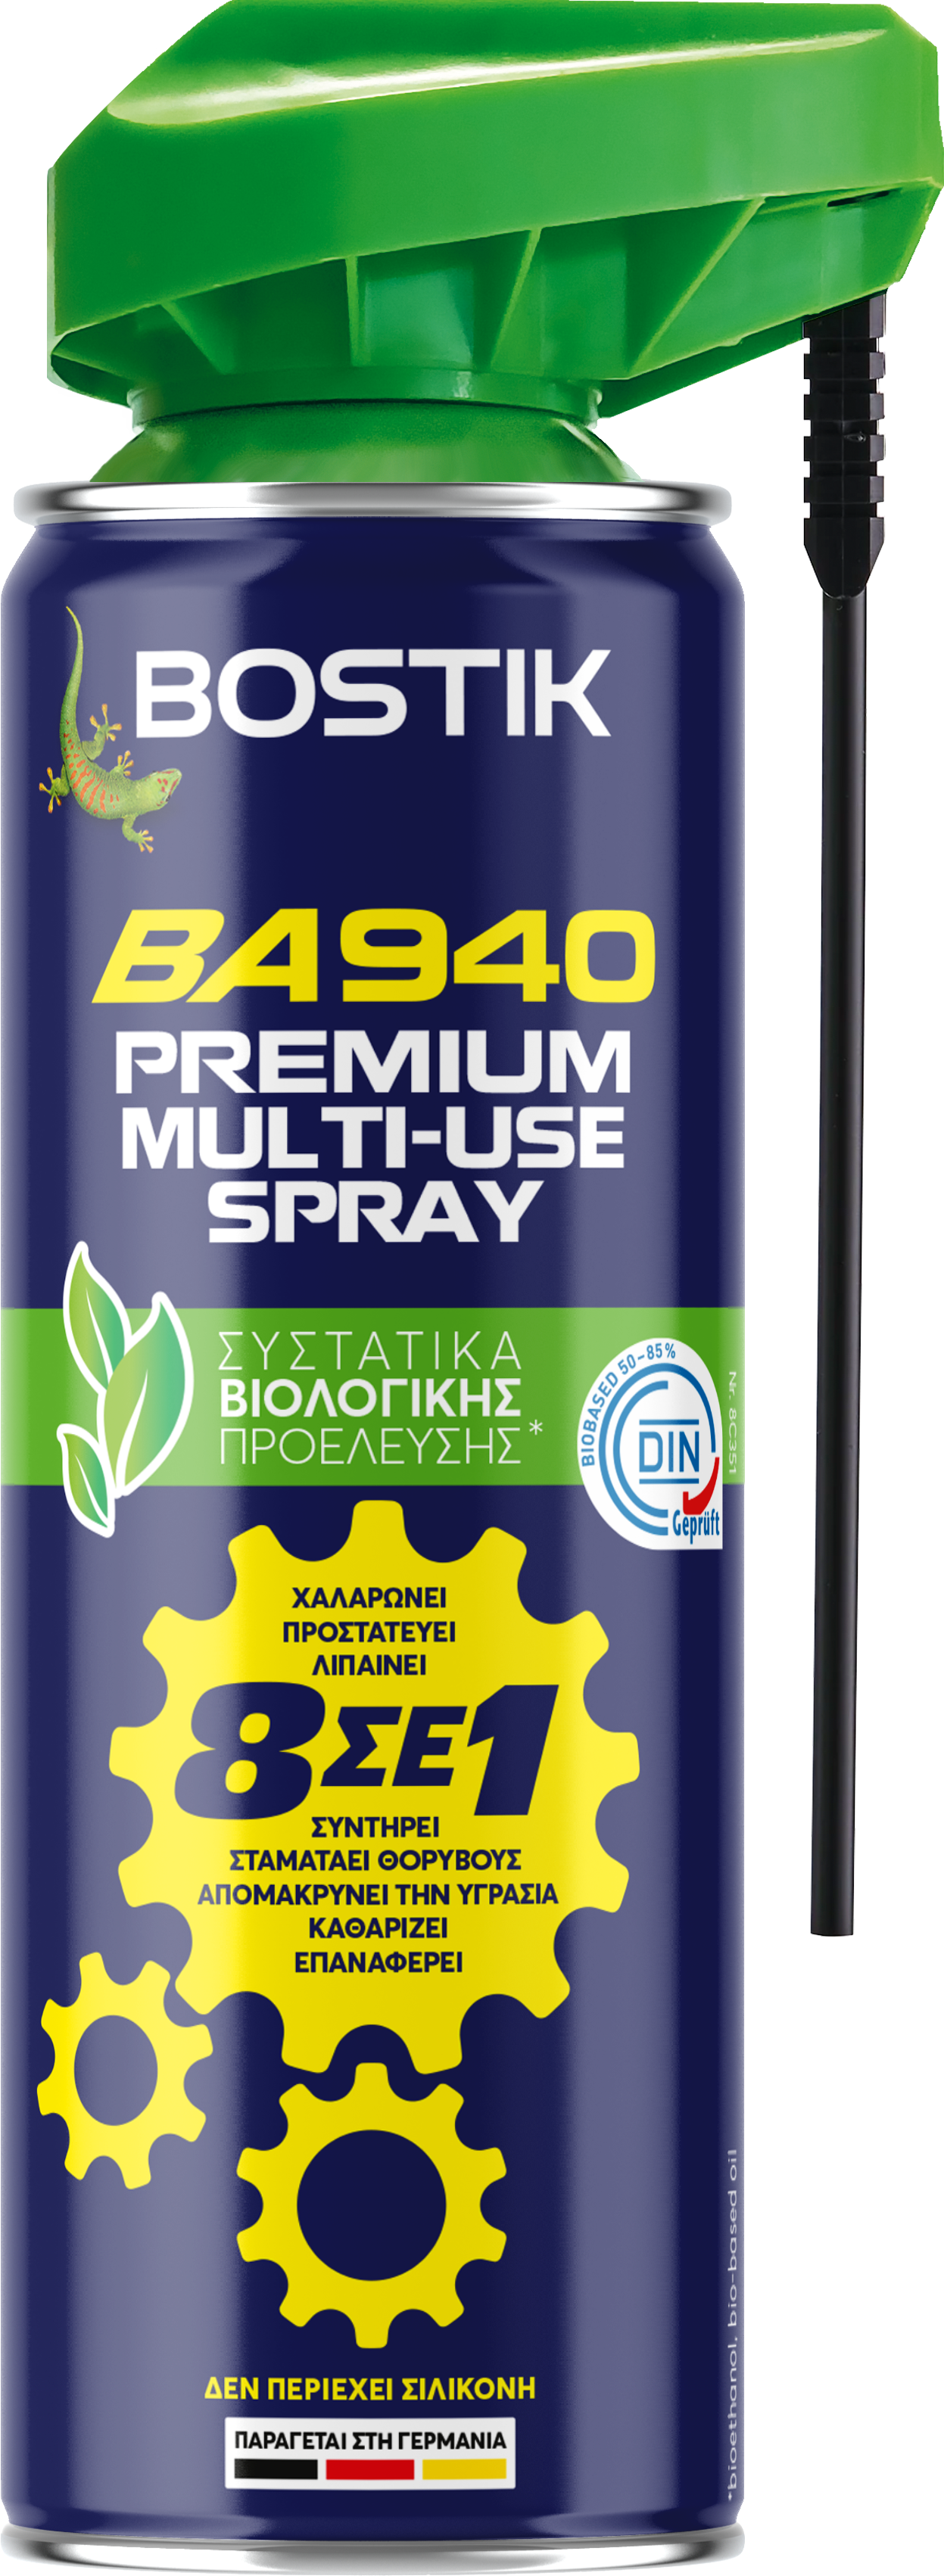 Bostik BA940 Premium Multi-Use Spray Smart-Straw